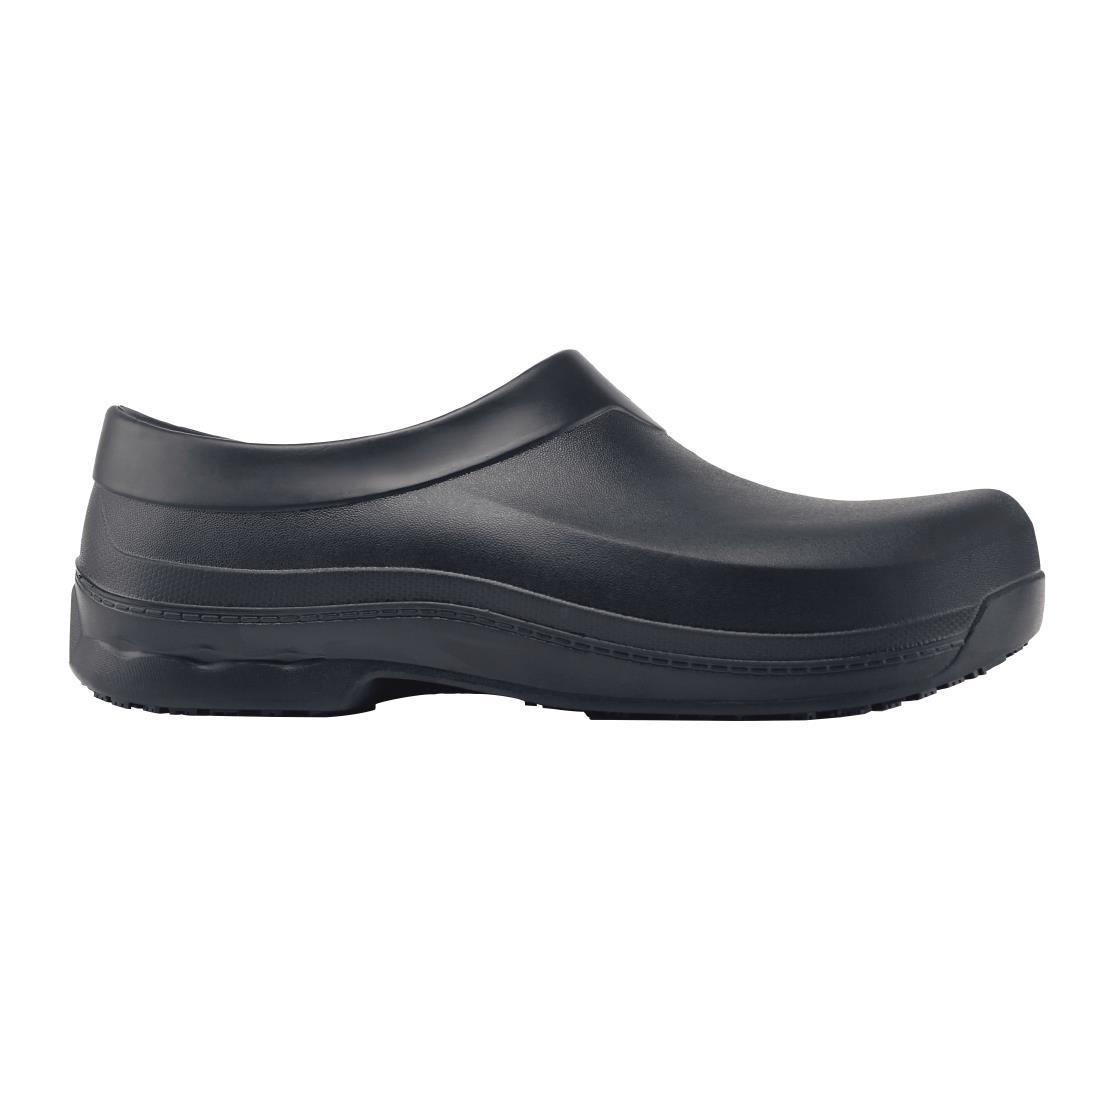 Shoes for Crews Radium Clogs Black Size 46 - BB581-46  - 1